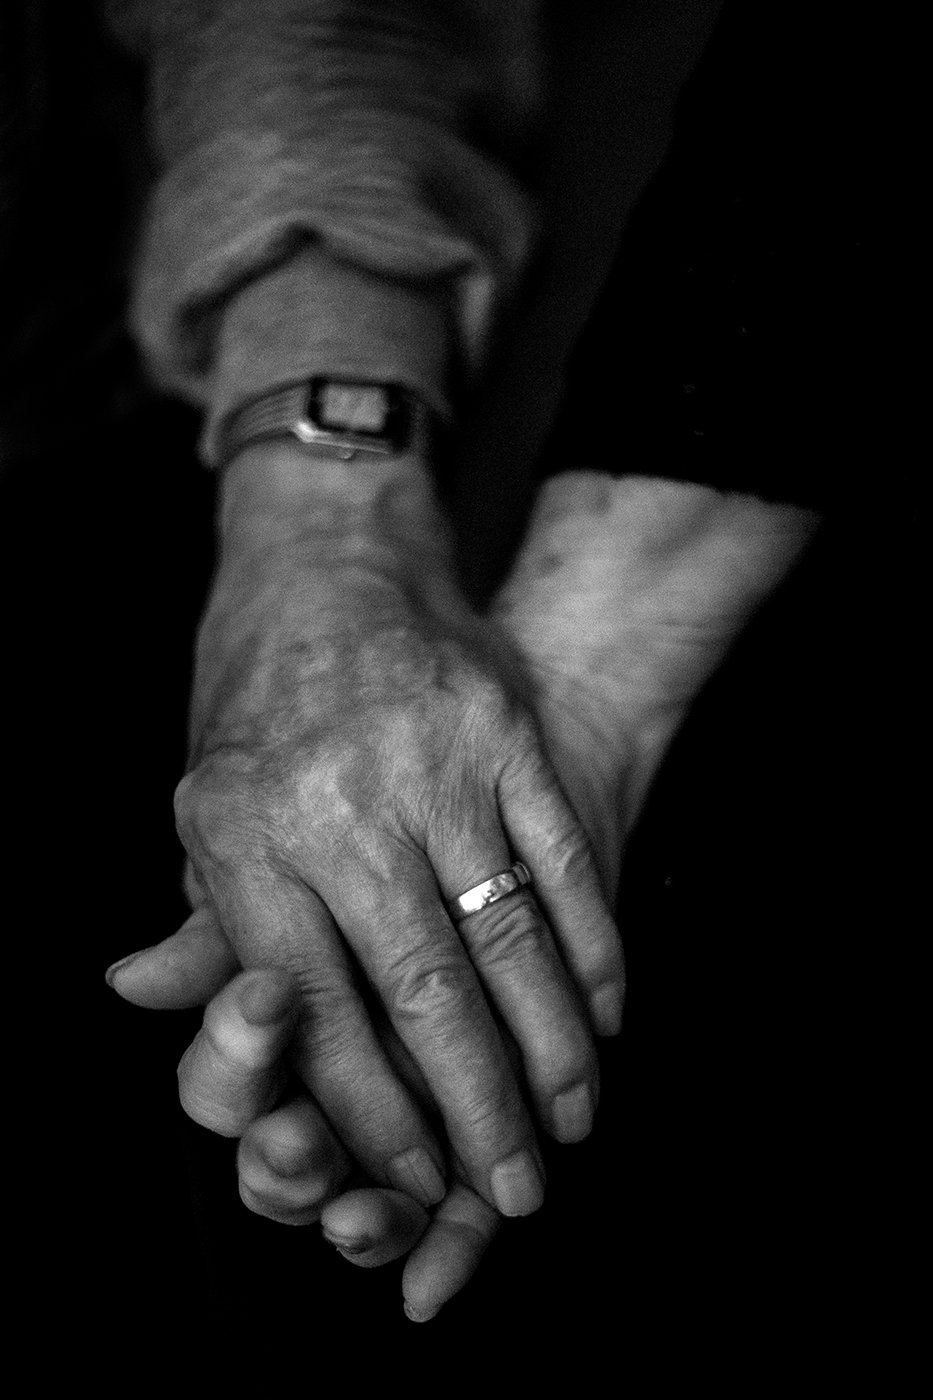 Photographer Sean Scheidt's grandparent's holding hands in black and white